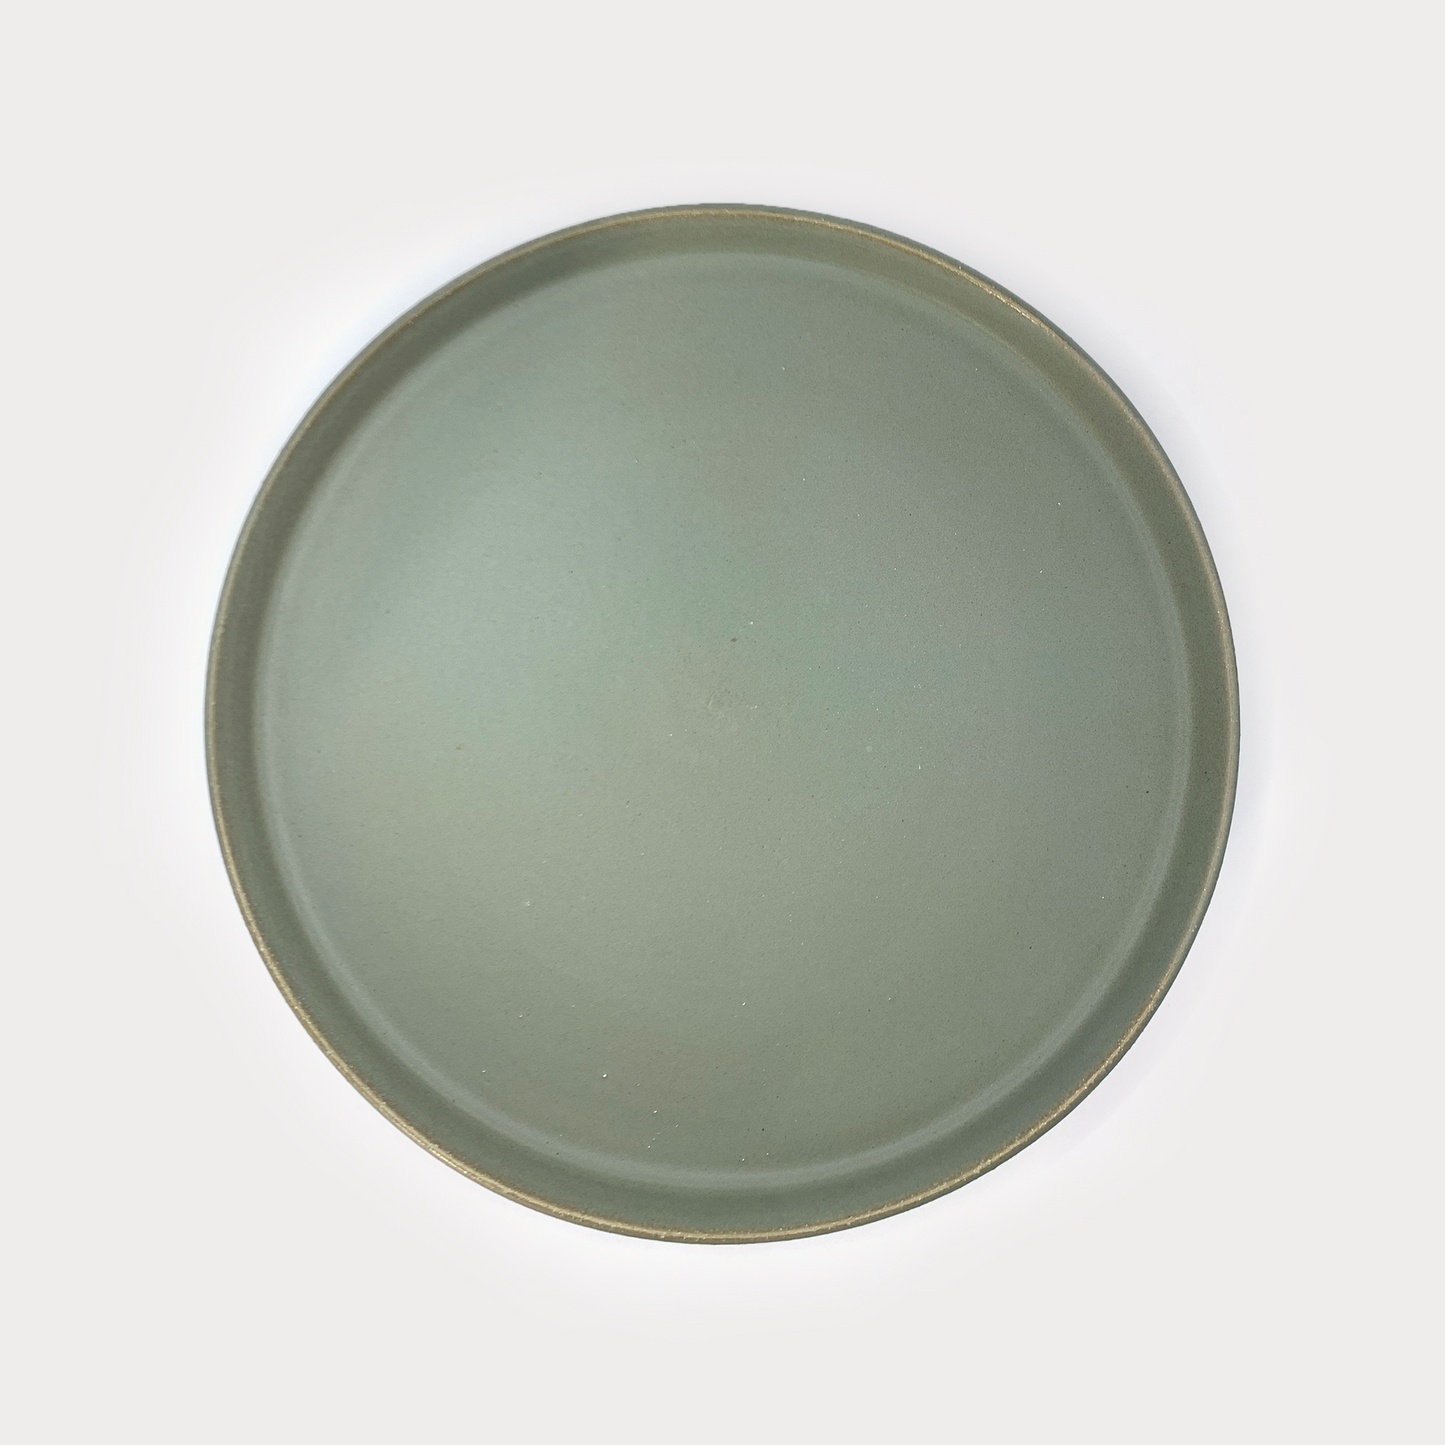 Japan Green dinnerware set - 4 pieces